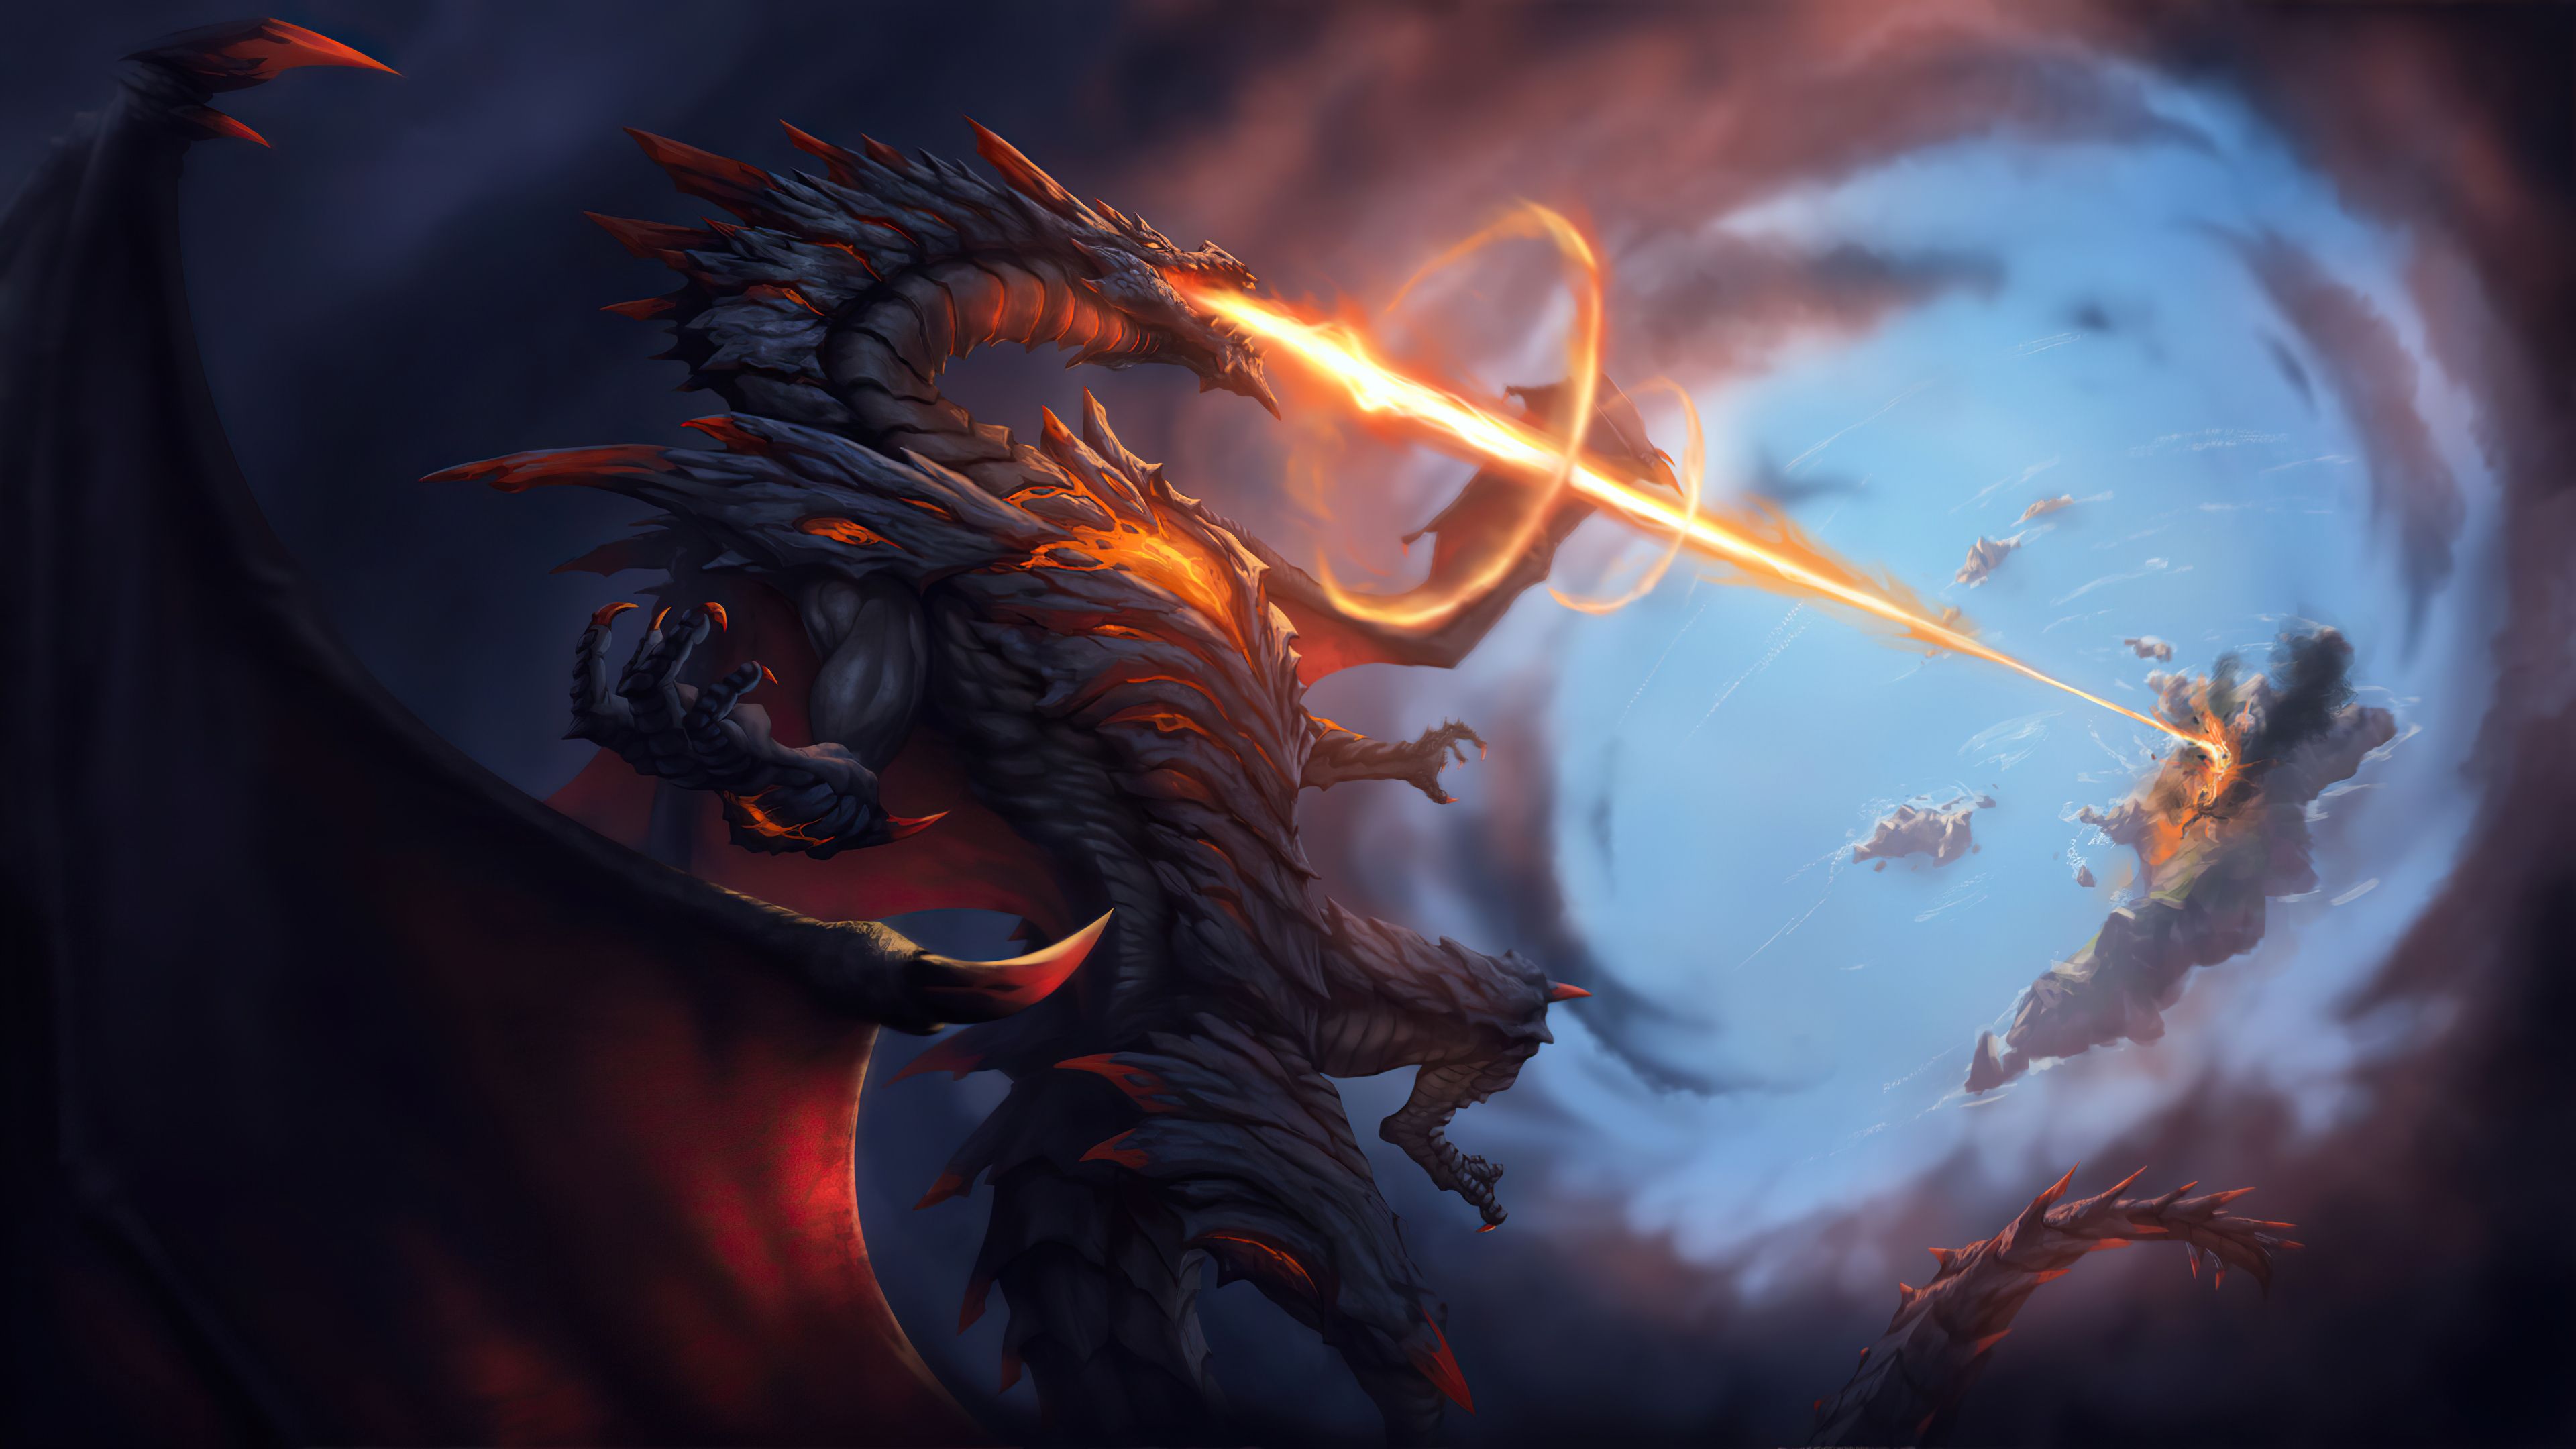 Angry Dragon 4K Art Wallpaper, HD Fantasy 4K Wallpaper, Image, Photo and Background